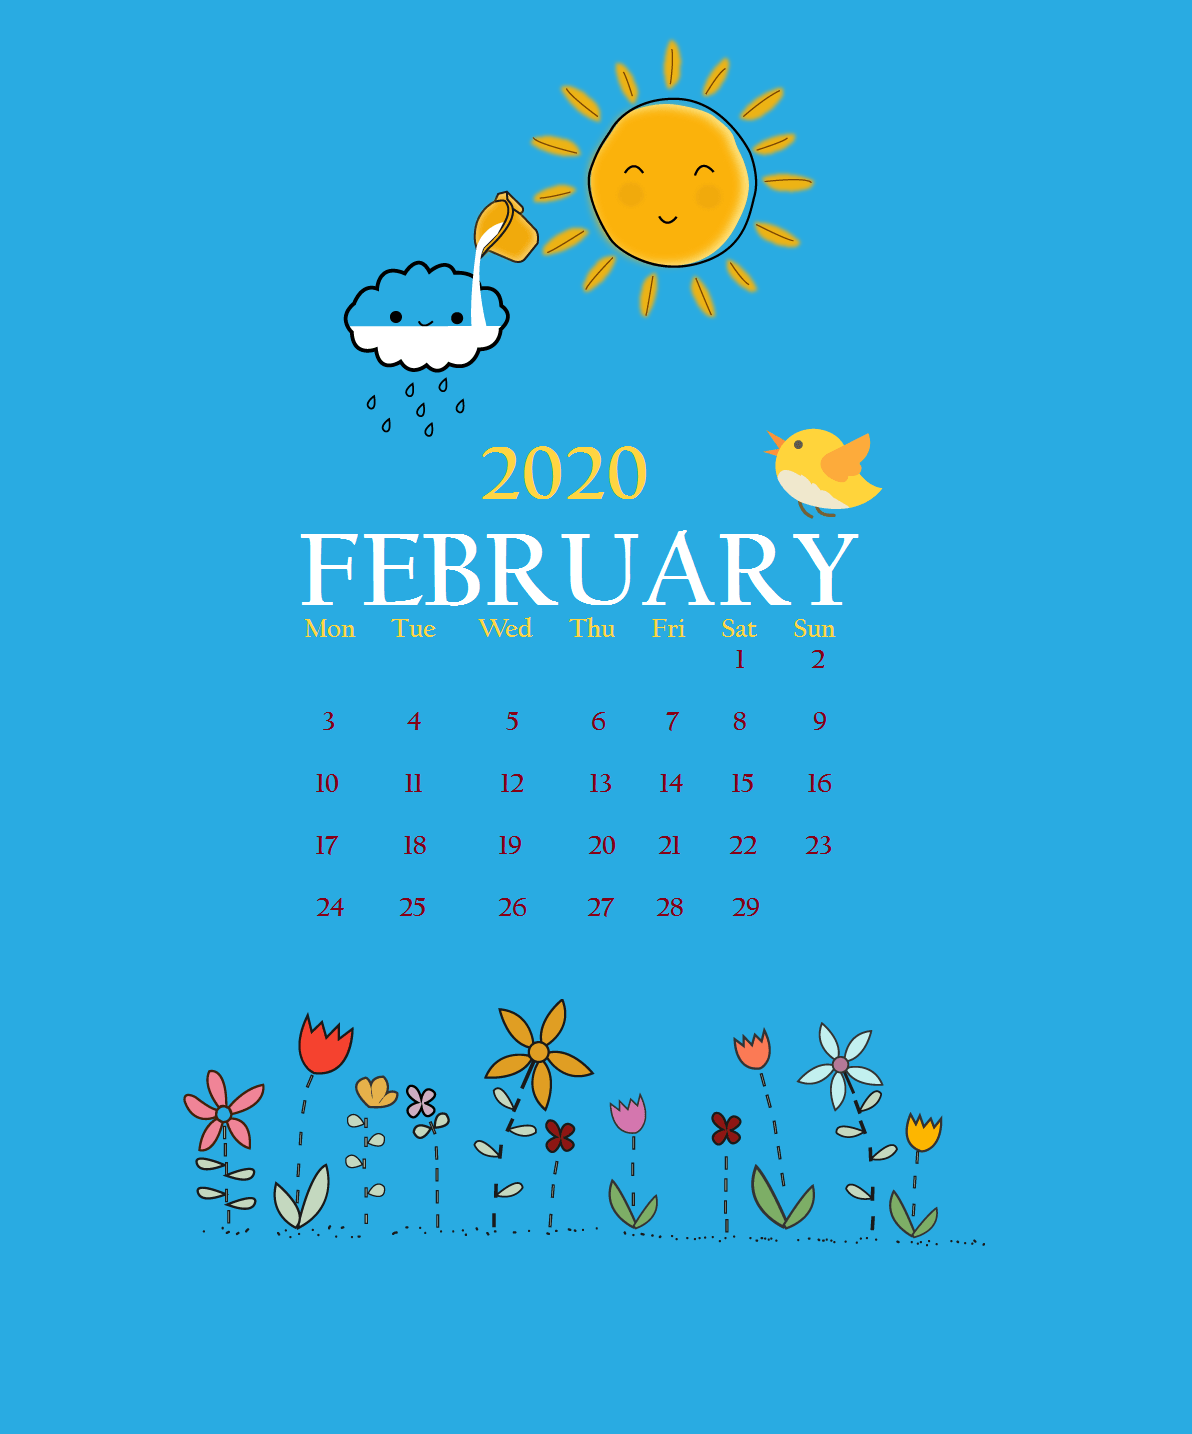 iPhone February 2020 Wallpaper Calendar